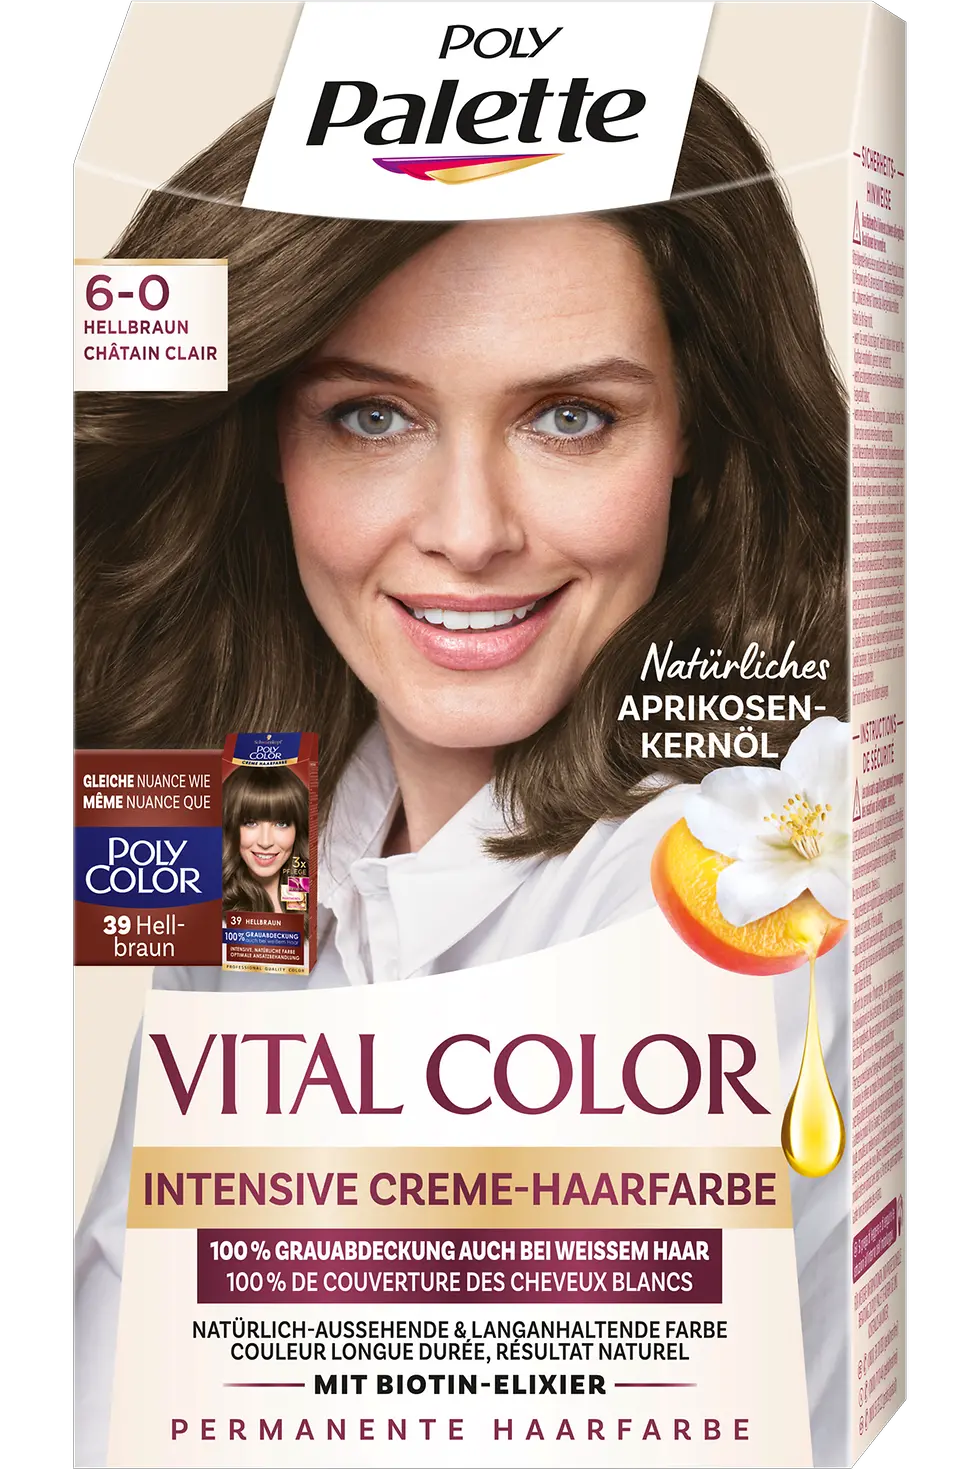 Poly Palette Vital Color 6-0 Hellbraun